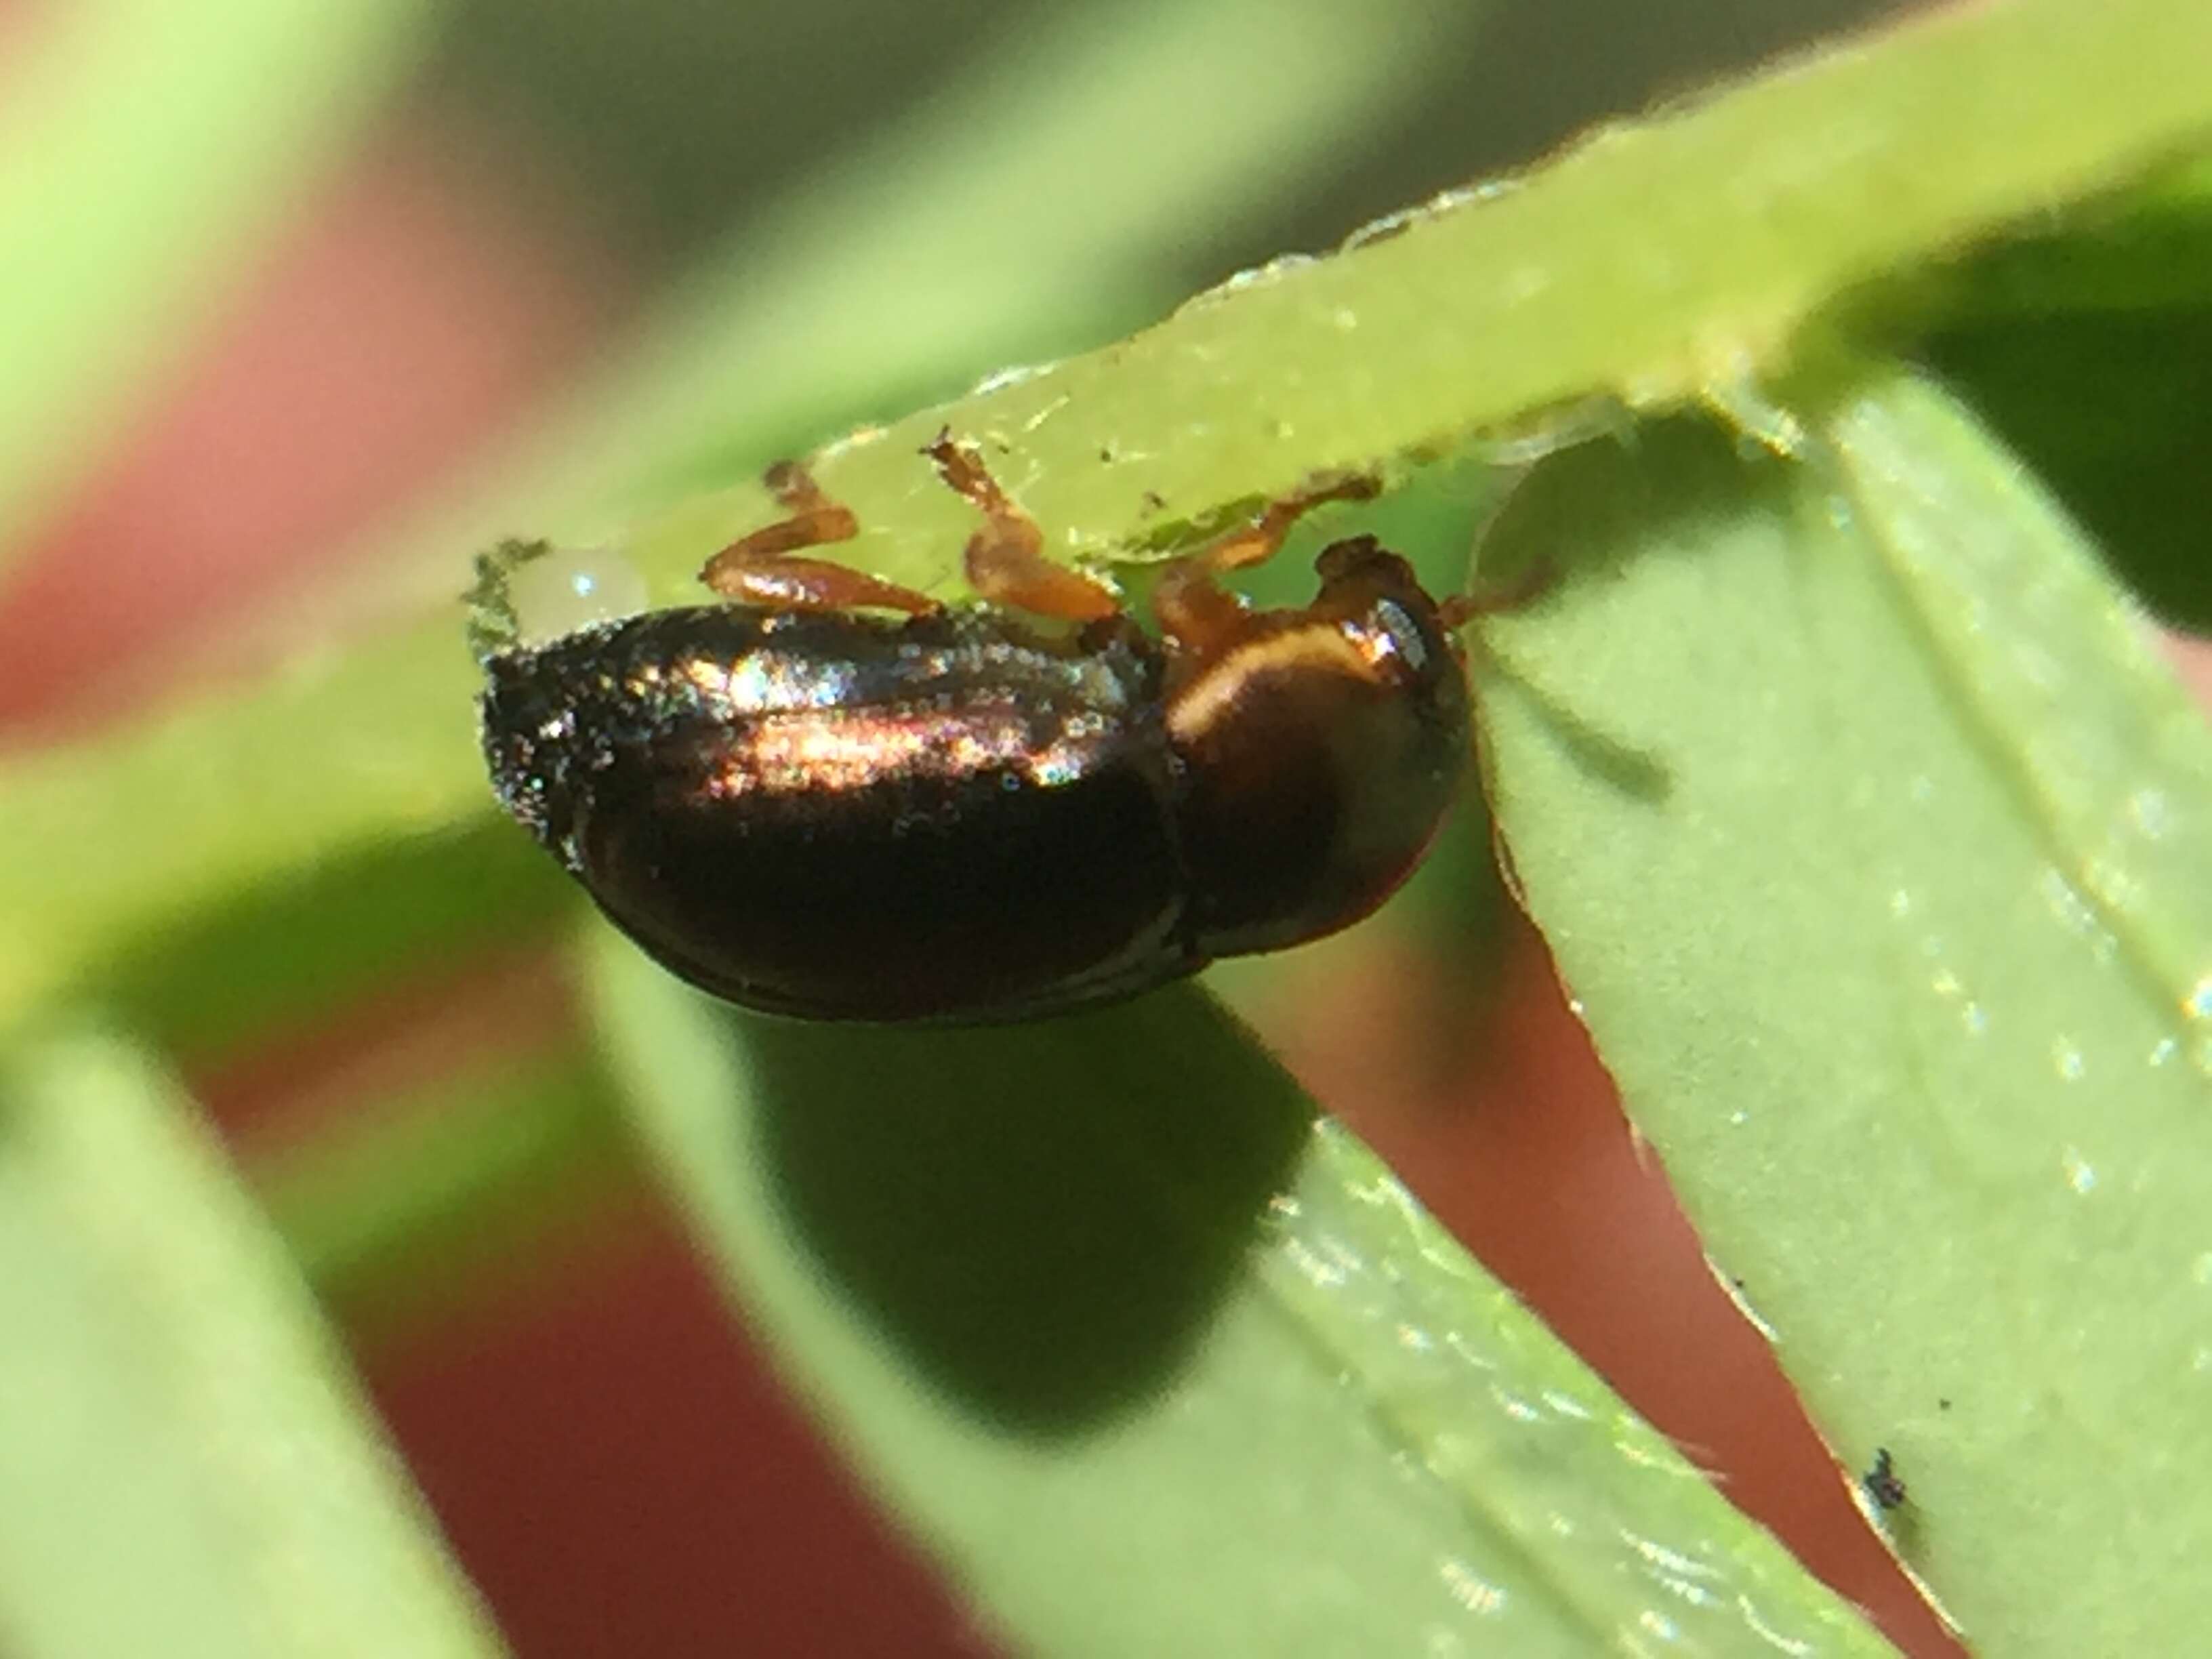 Image of Bronze leaf beetle